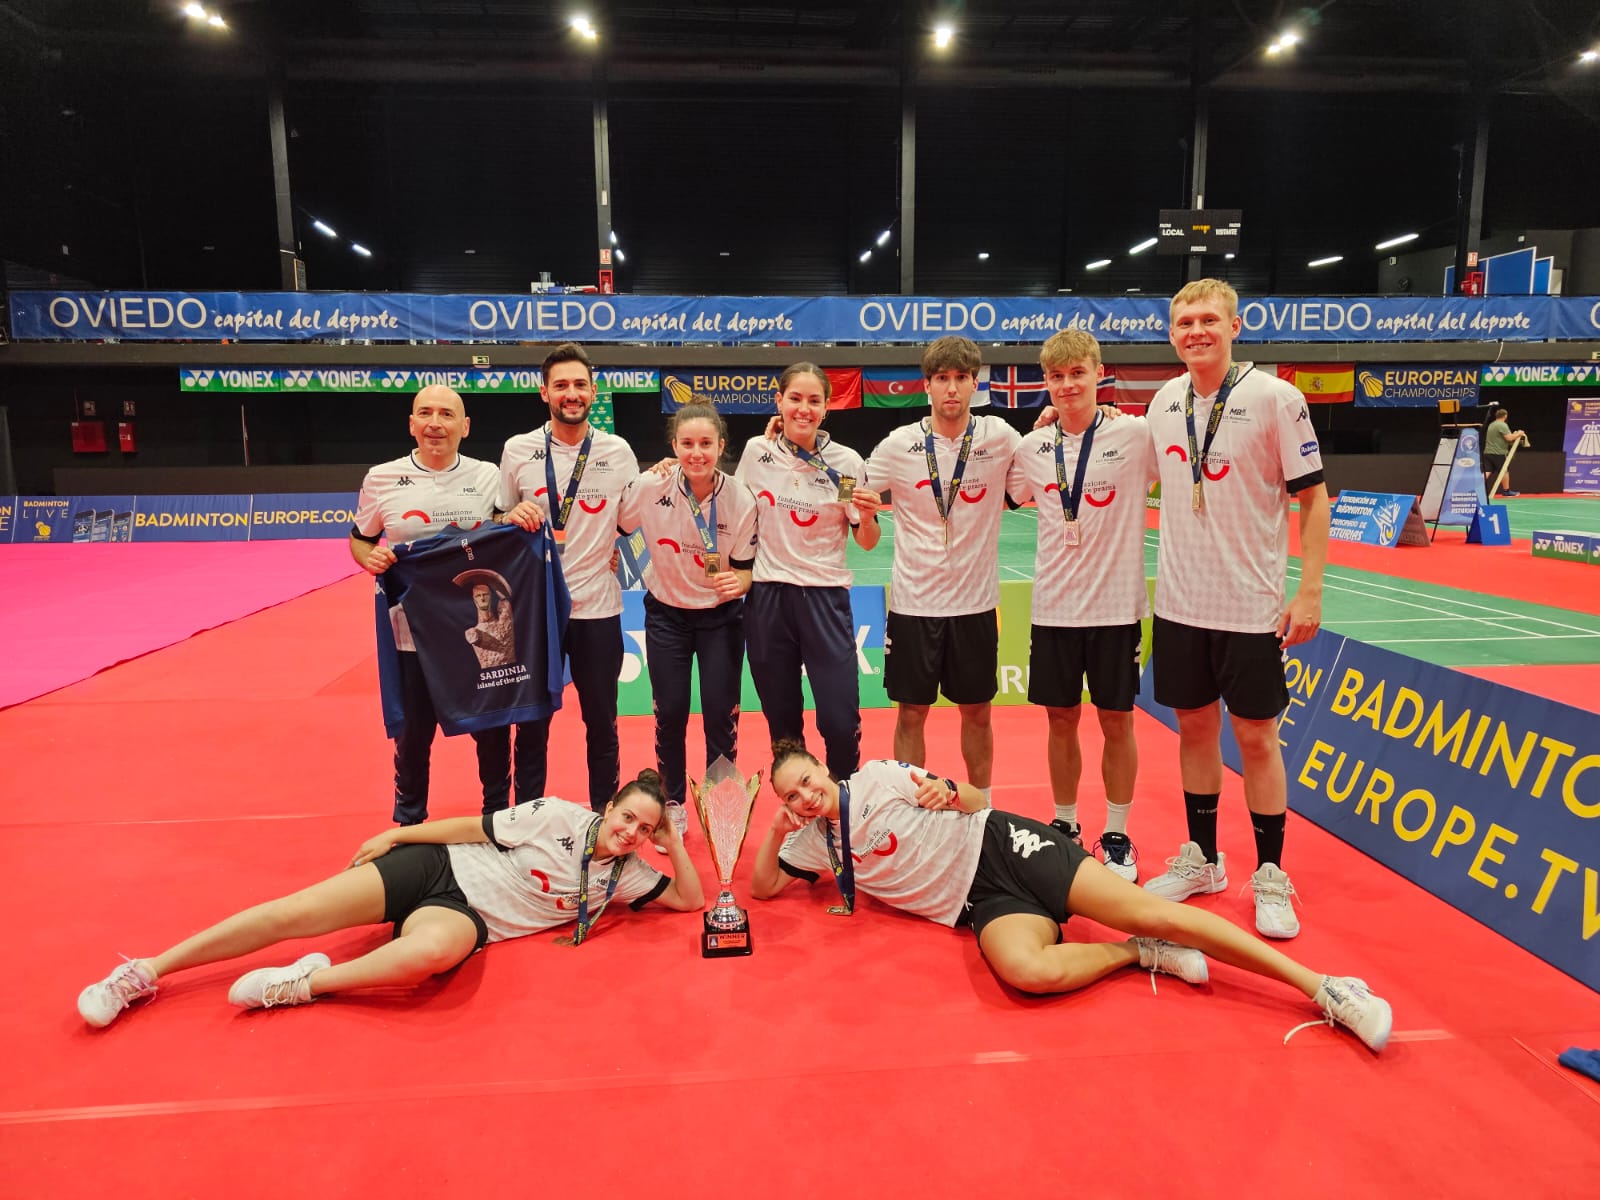 MATEX MARABADMINTON The Rise of Italian Badminton in the European Club Championships